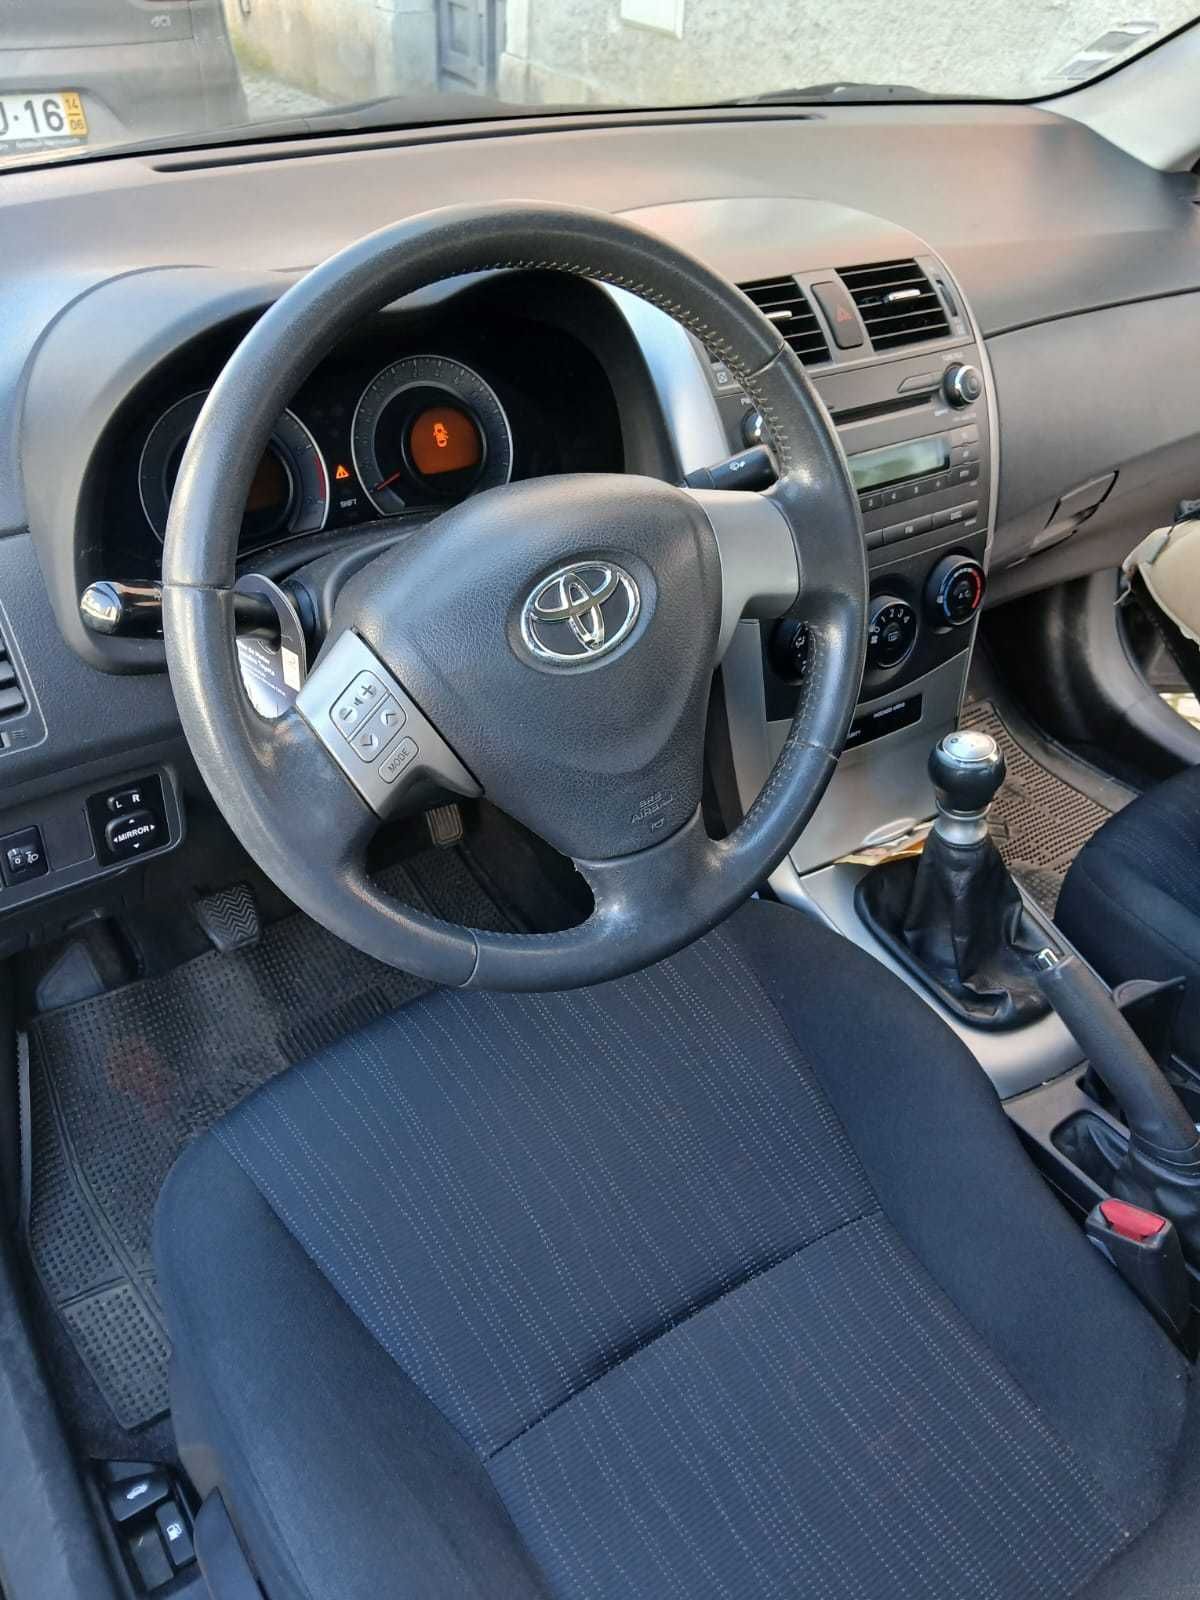 Um carro característico da Toyota. Imaculado, seguro e irrepreensível!